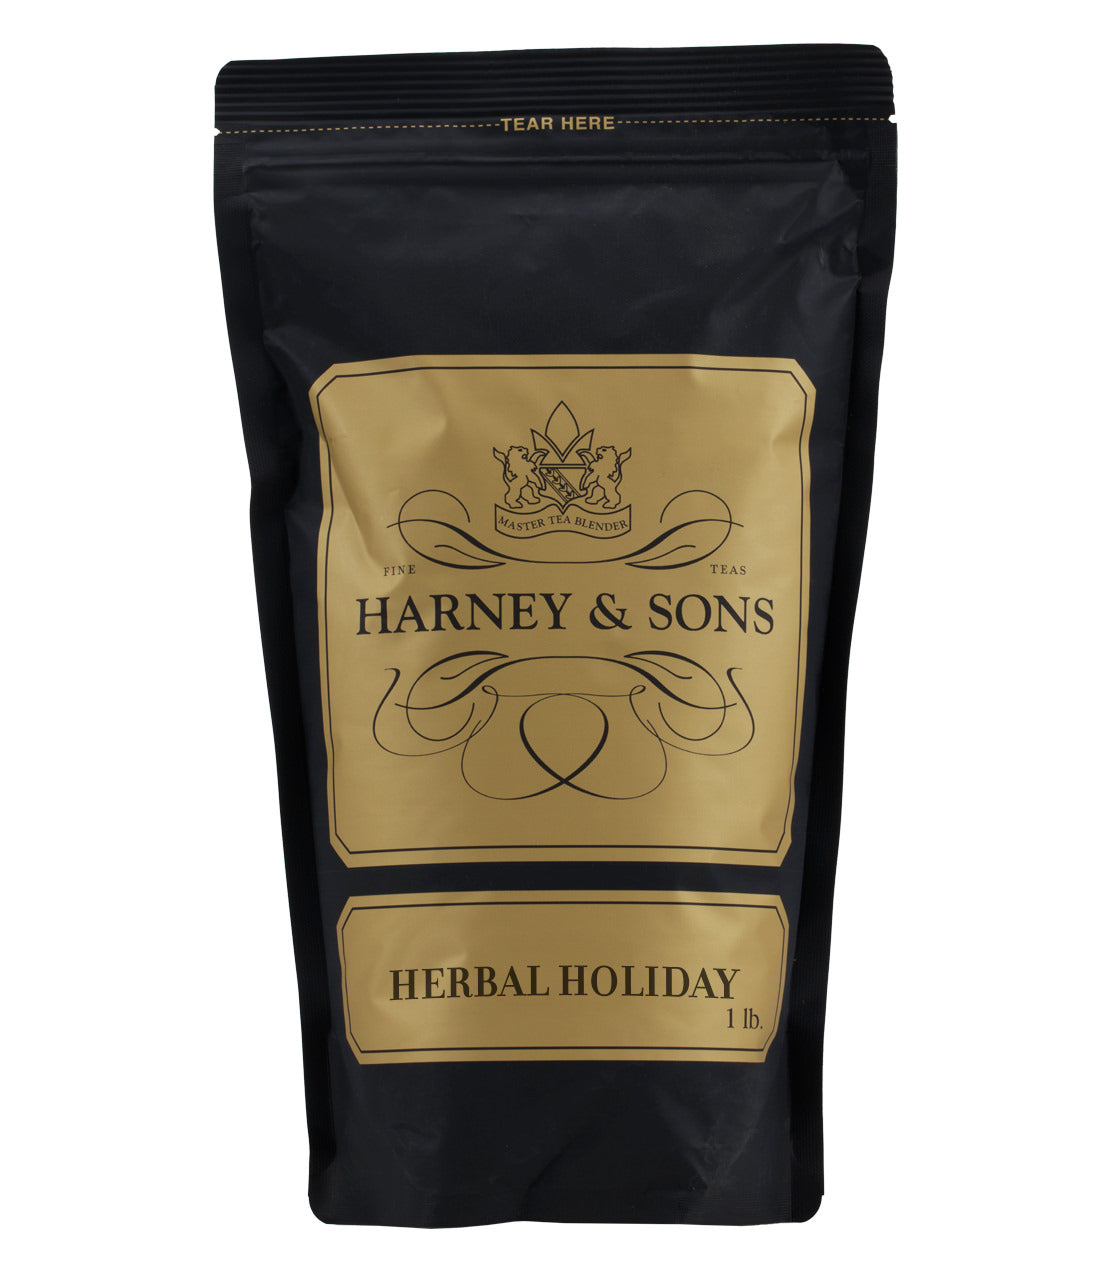 Holiday Herbal - Loose 1 lb. Bag - Harney & Sons Fine Teas